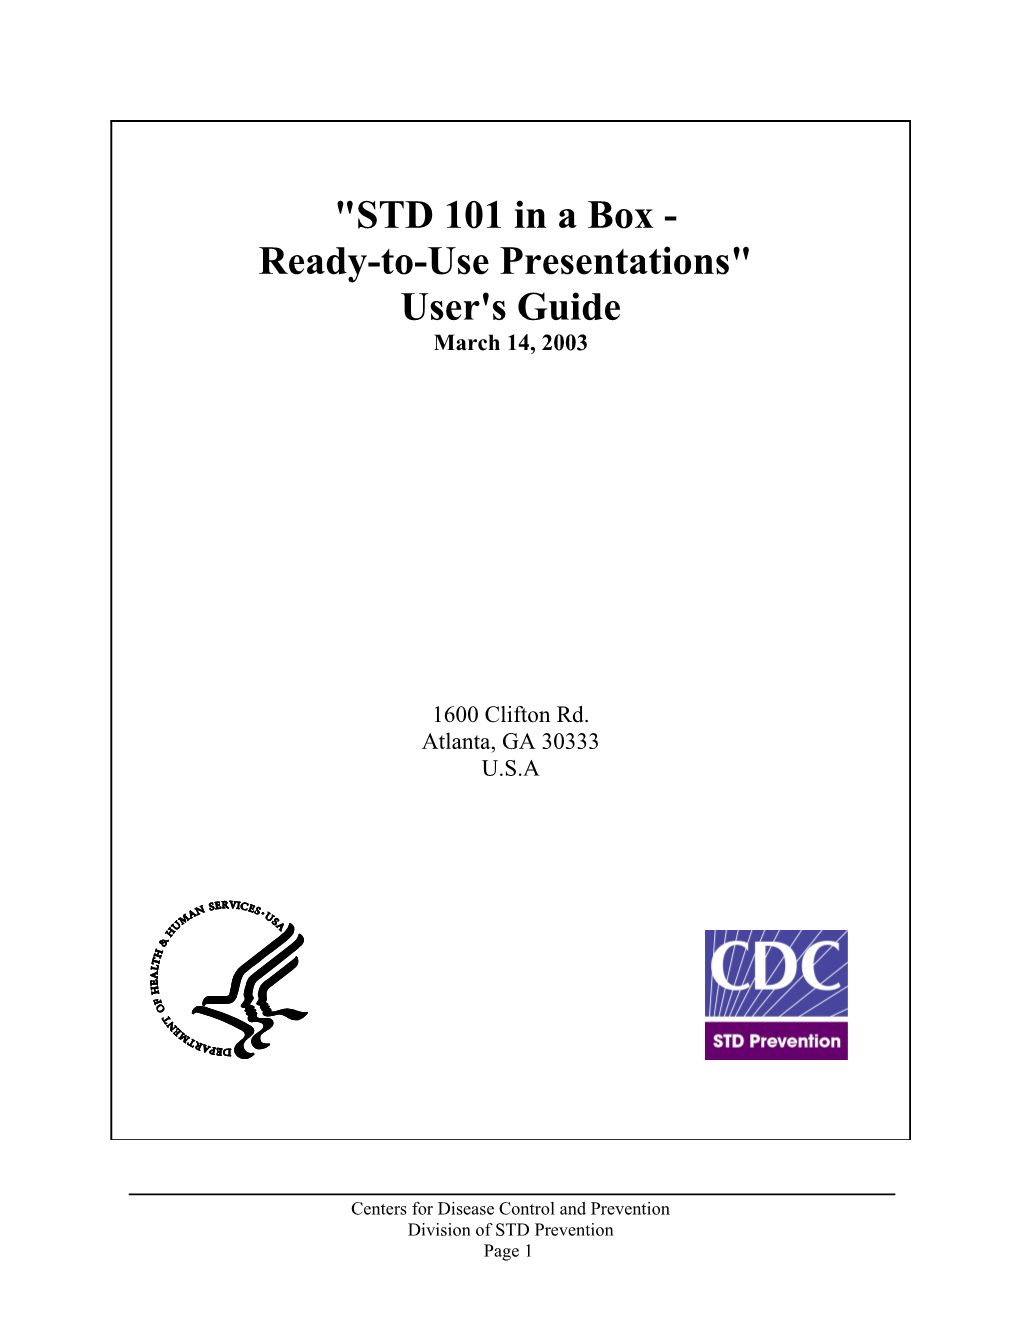 STD 101 User's Guide